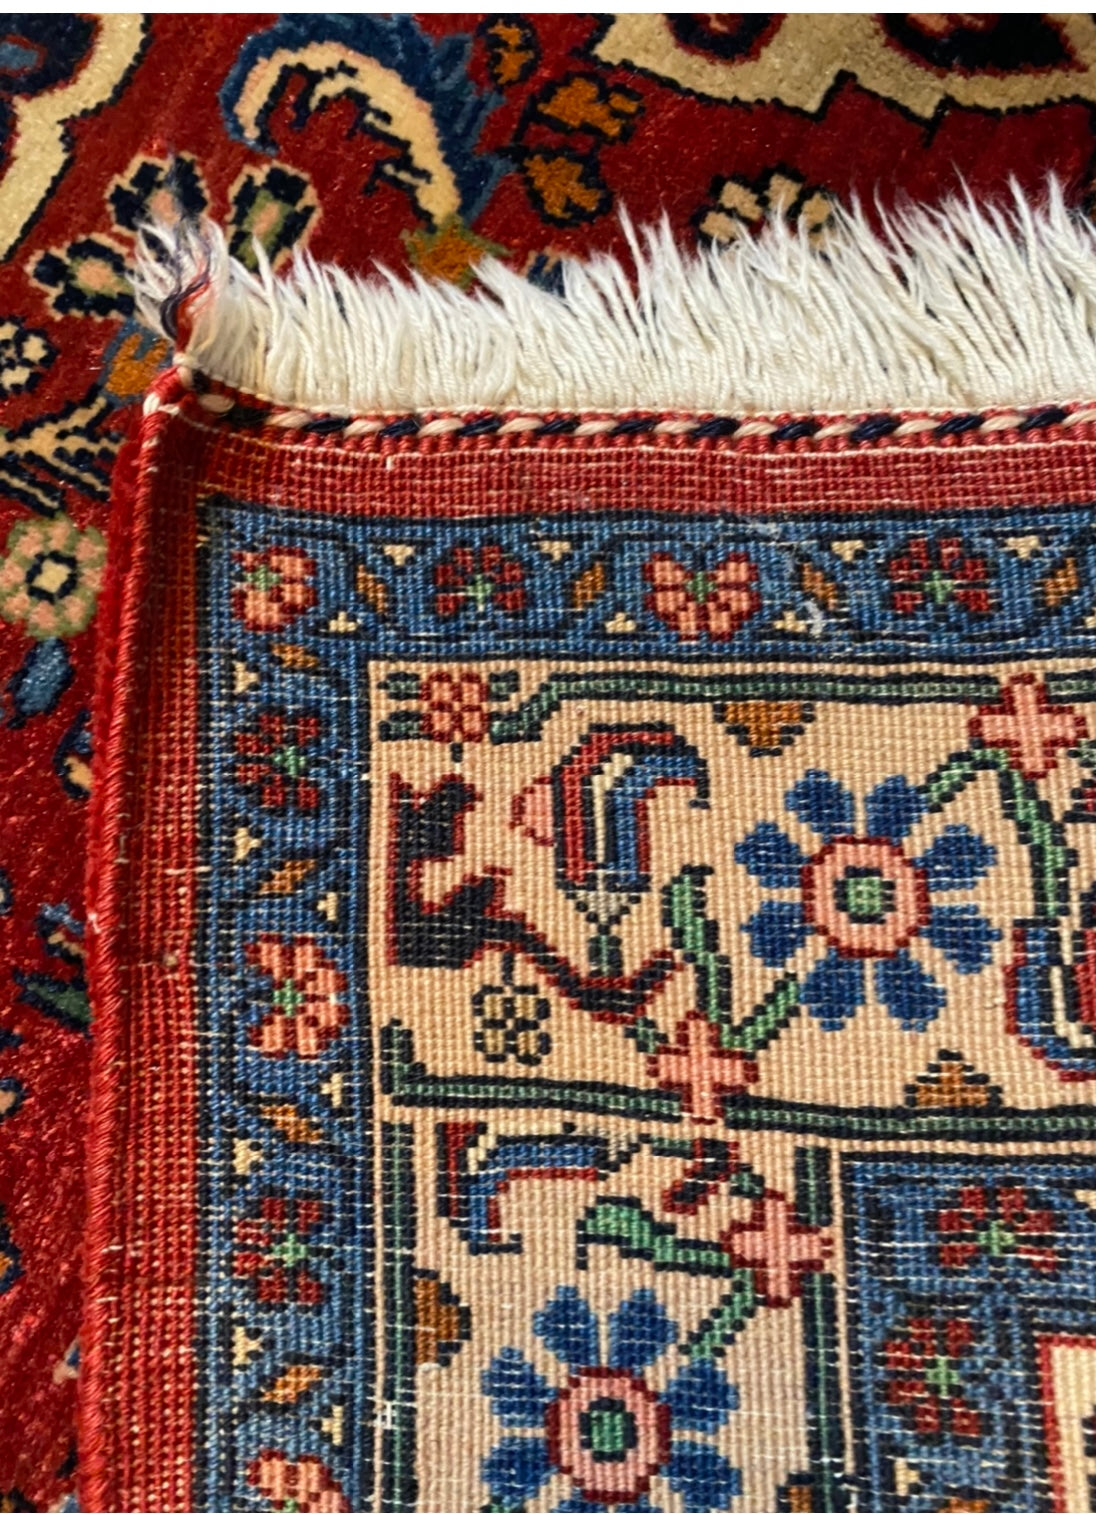 A Semianique Persian Bidjar carpet of the absolute highest quality, ca 111 x 179 cm